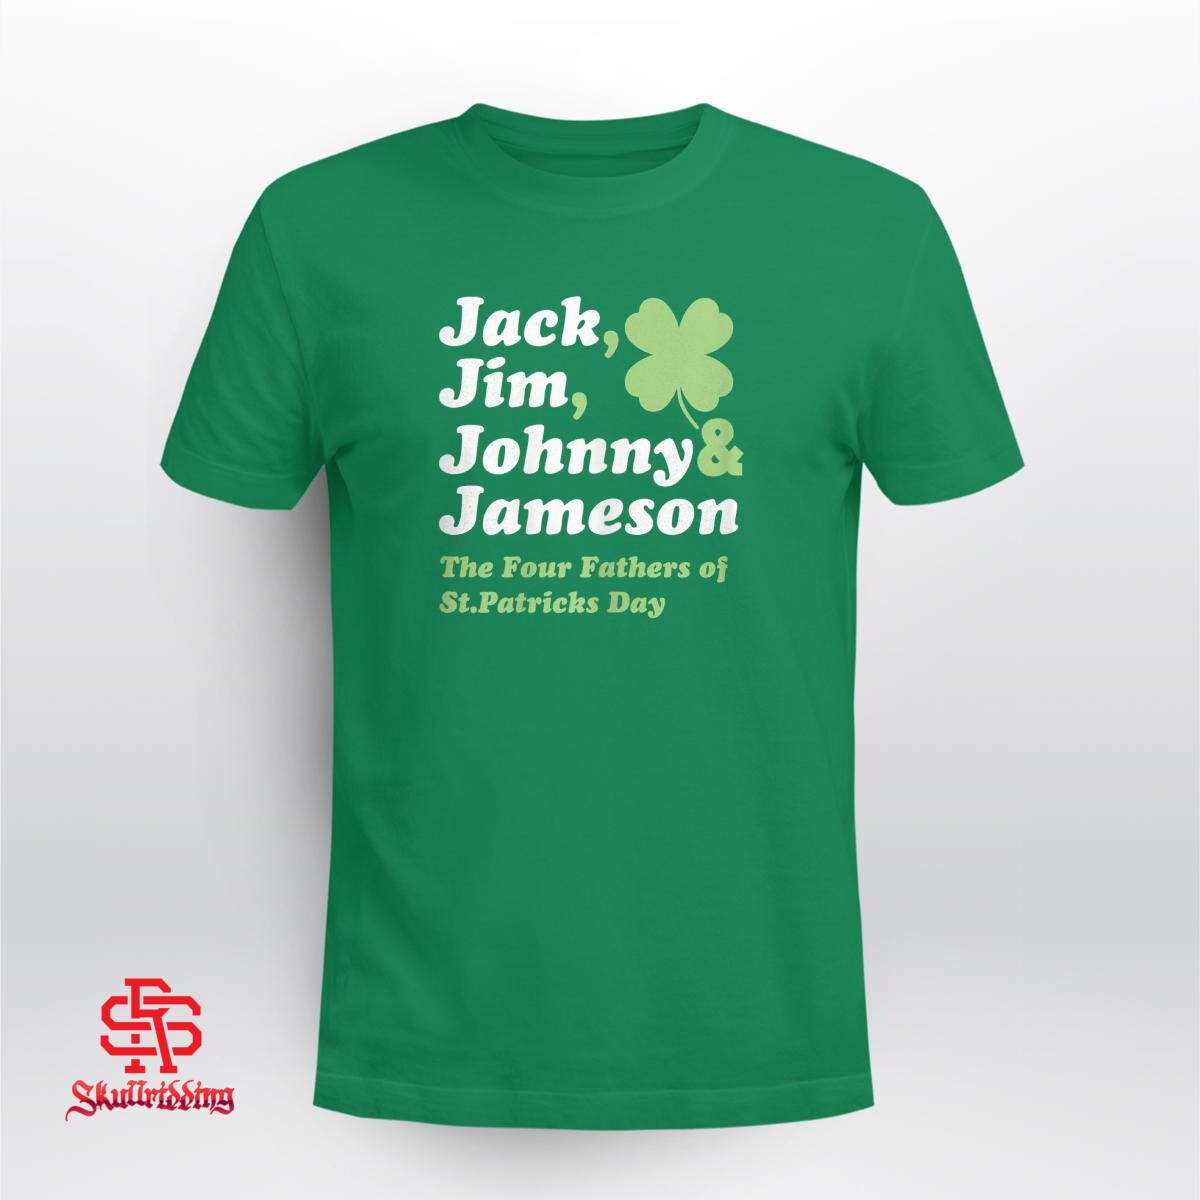 Saint Patricks Day Shirts Jack Jim Johnny Jameson FathersSaint Patricks Day Shirts Jack Jim Johnny Jameson Fathers